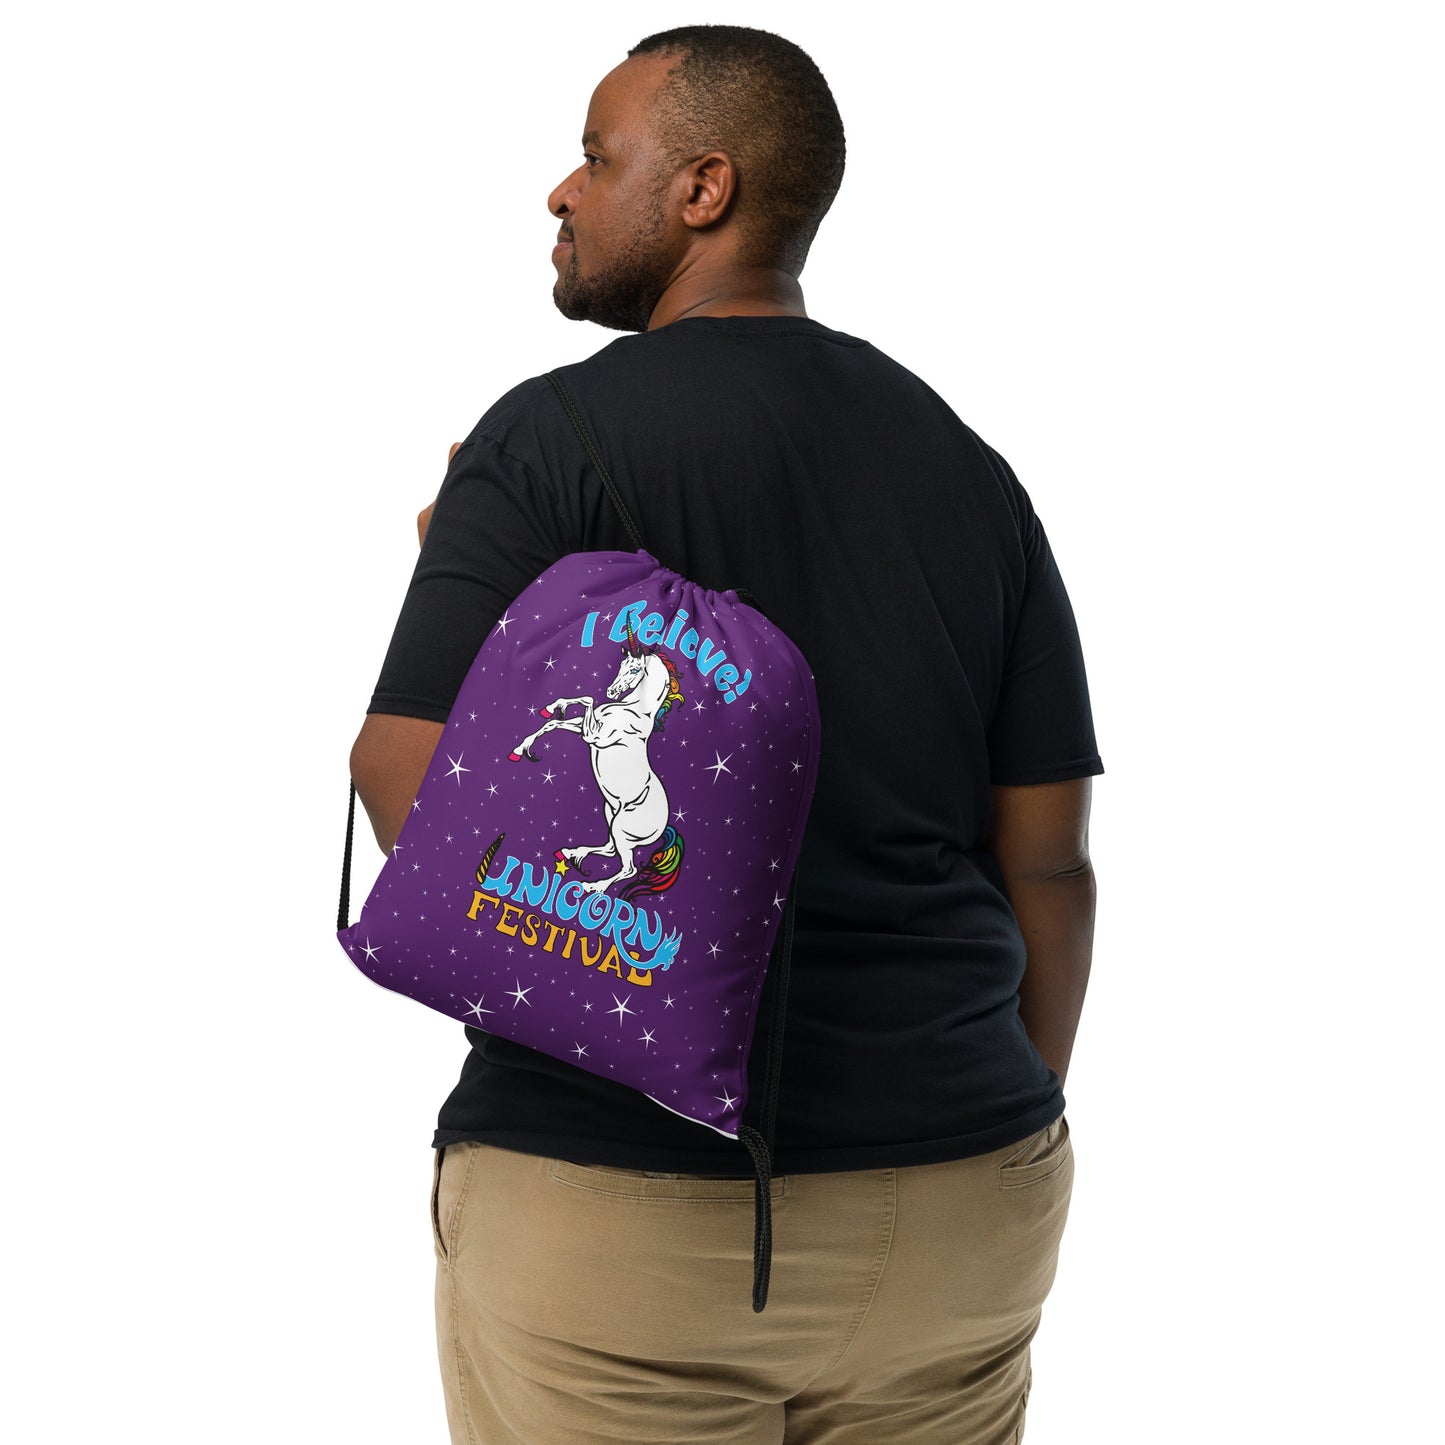 Unicorn Festival Purple Drawstring bag